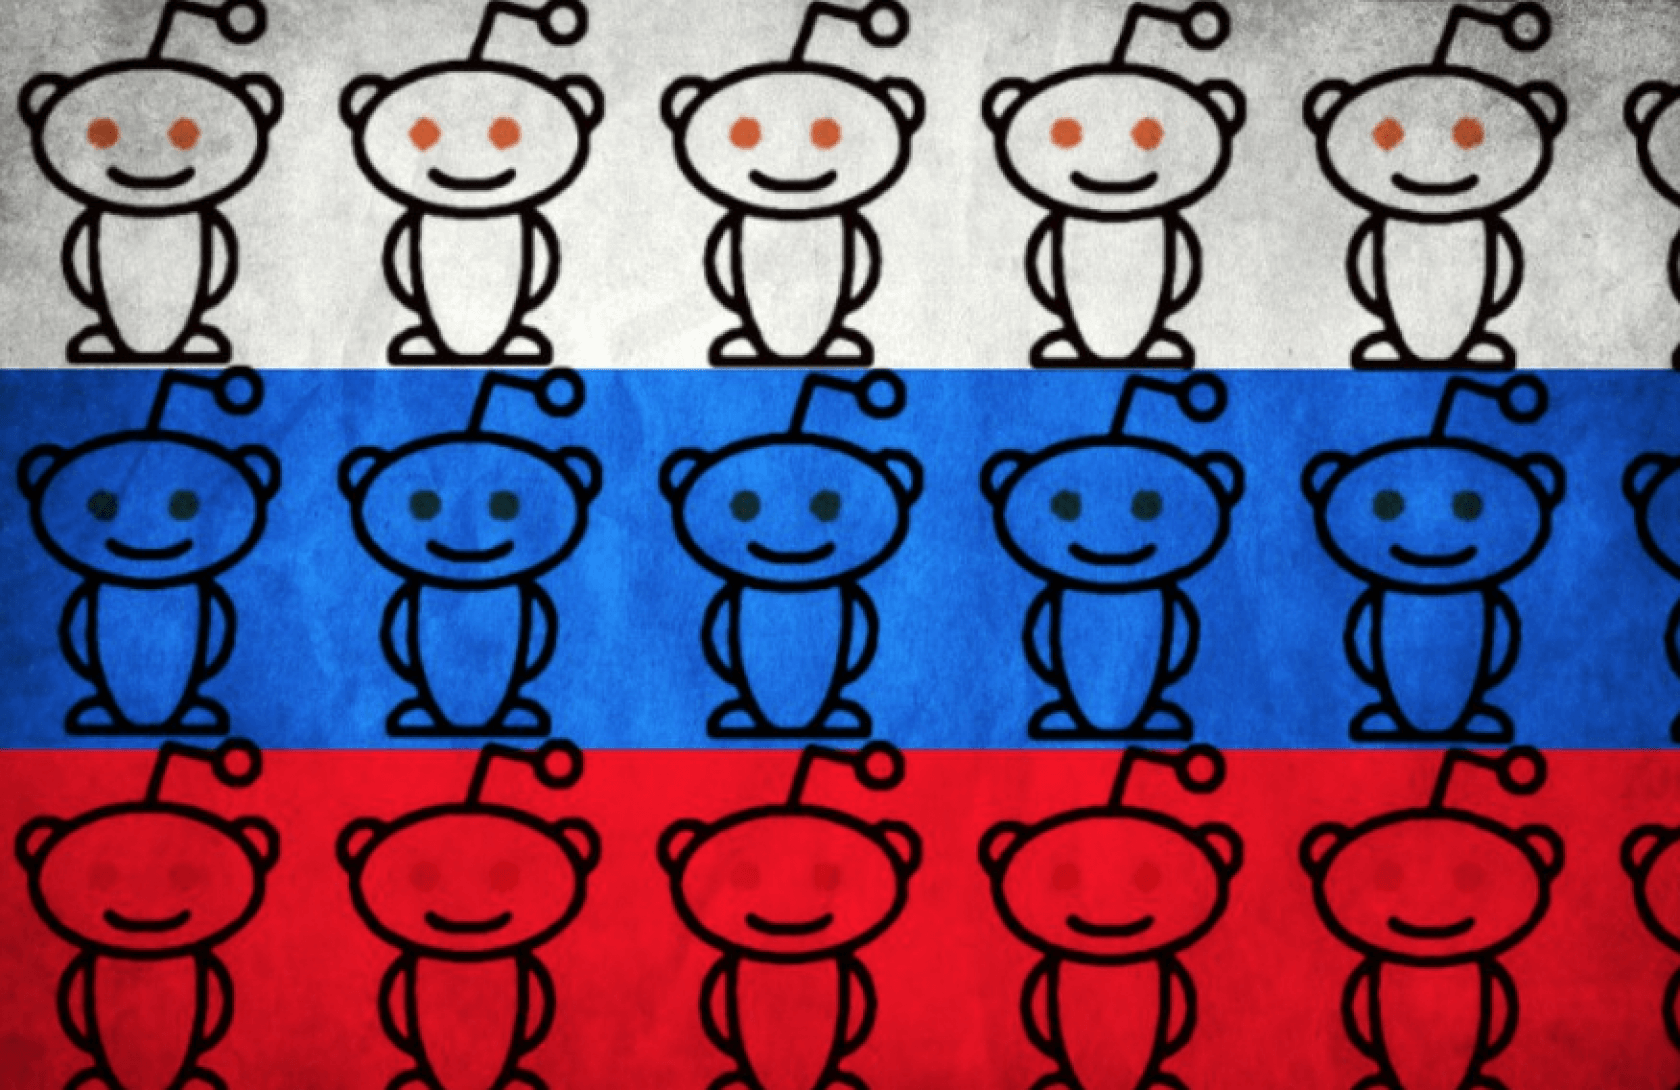 Russian trolls are still wreaking havoc on many Reddit communities